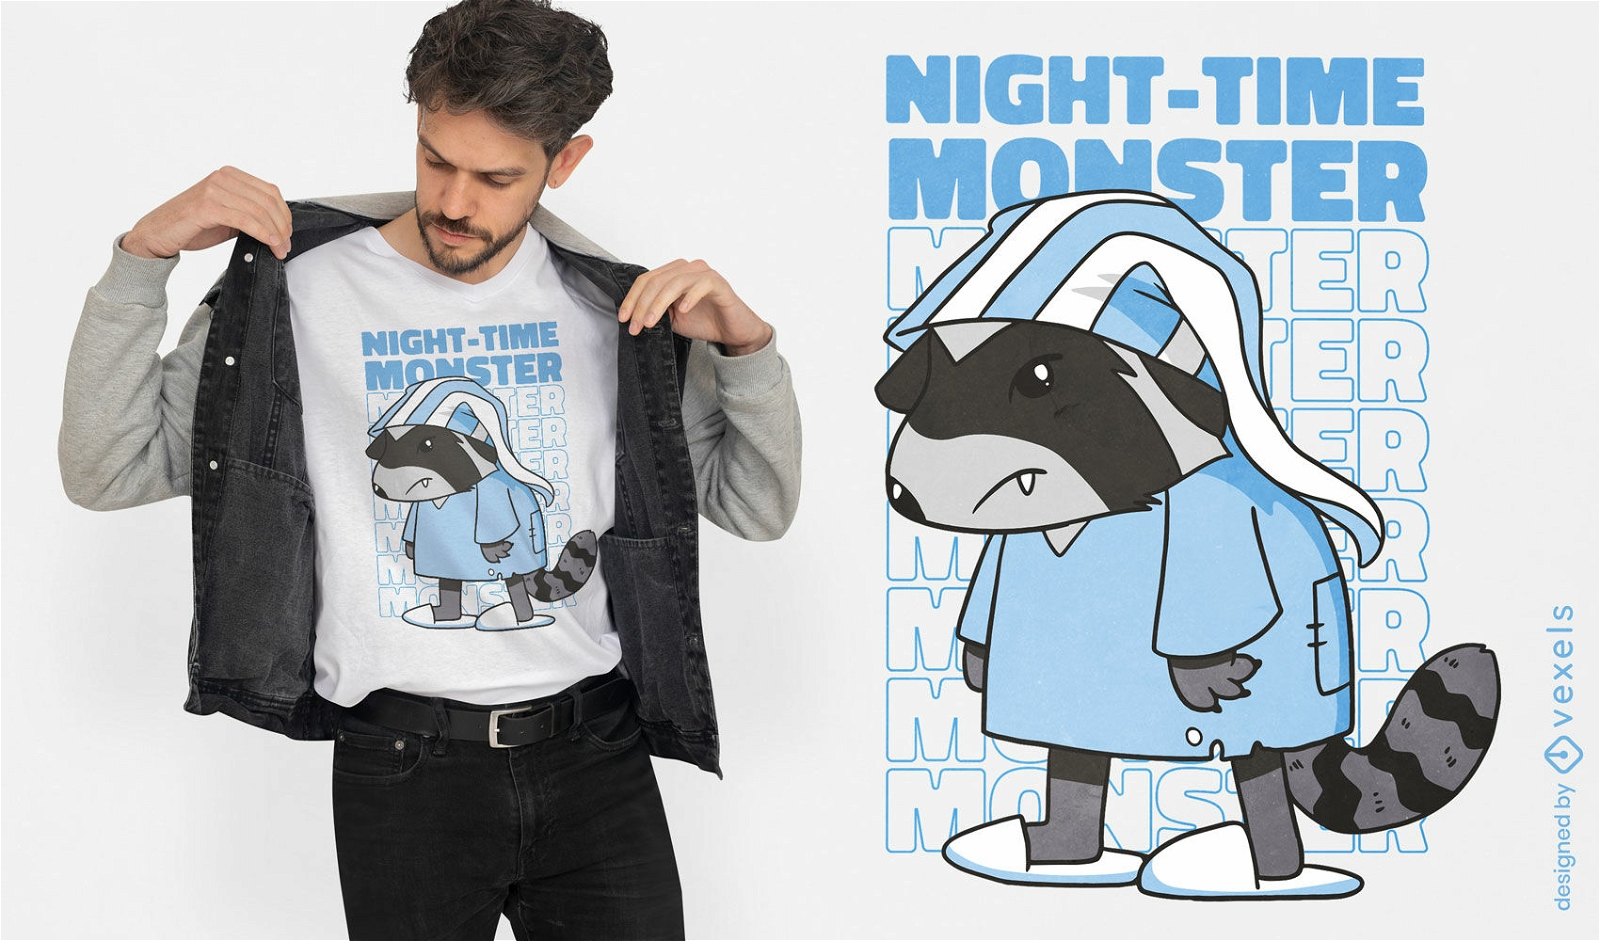 Night time monster raccoon t-shirt design